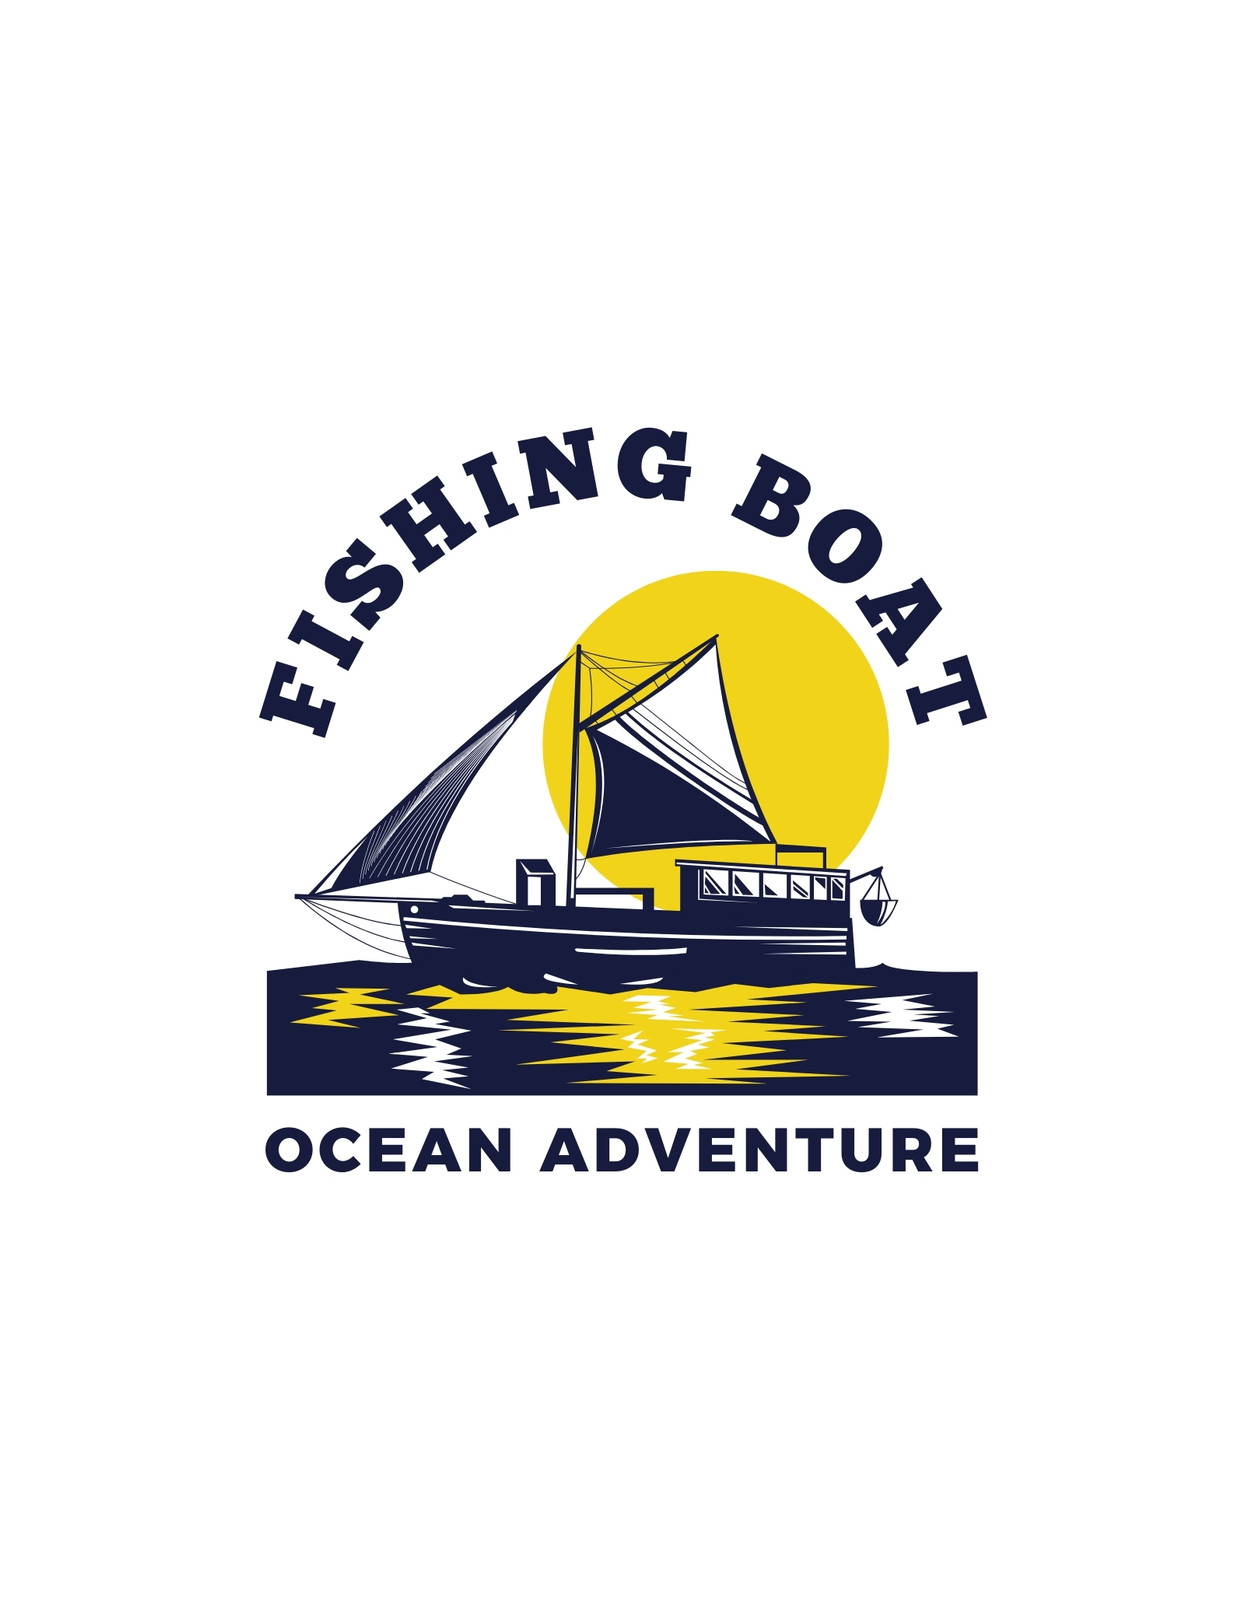 https://marketplace.canva.com/EAE-XBBhiW4/1/0/1245w/canva-fishing-boat-adventure-t-shirt--lyb3eOs-4k.jpg